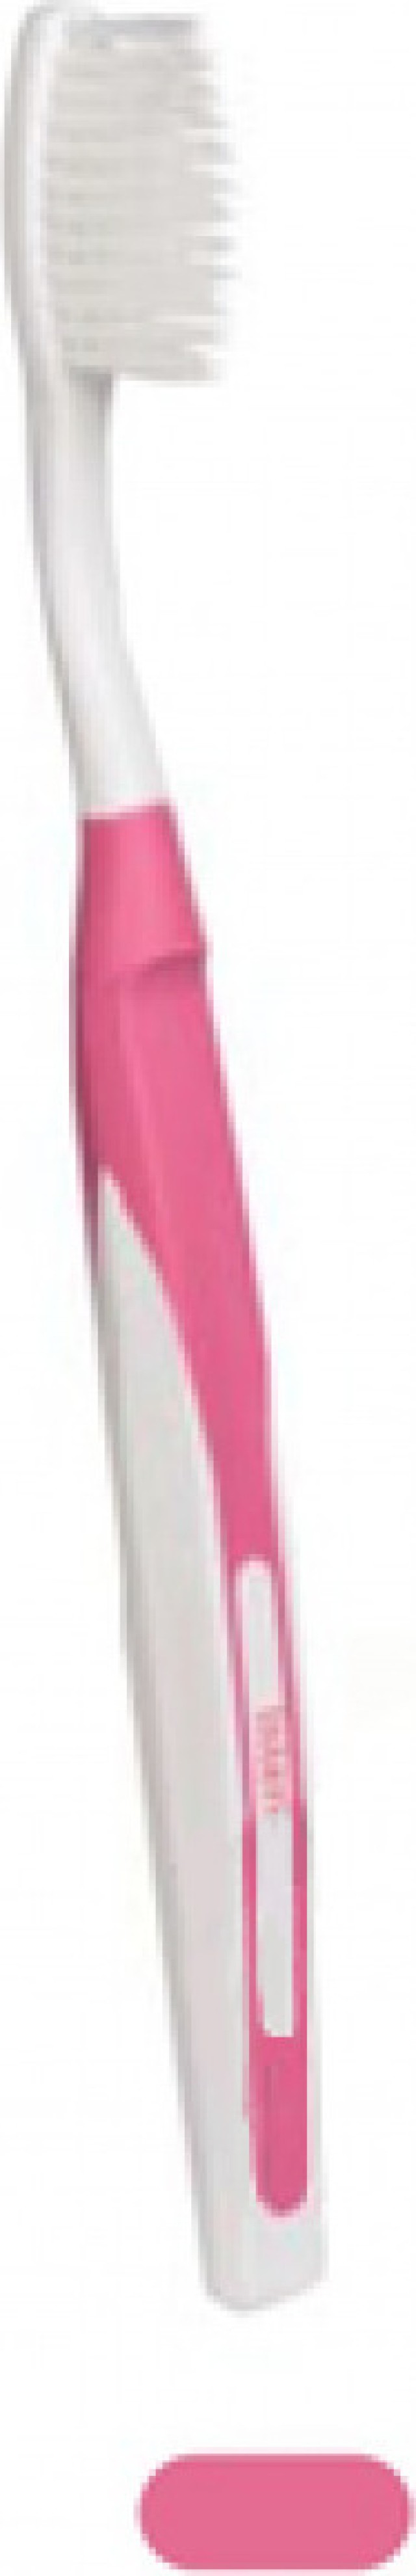 INTERMED Toothbrush Soft Slim Ροζ χρώμα 1τμχ